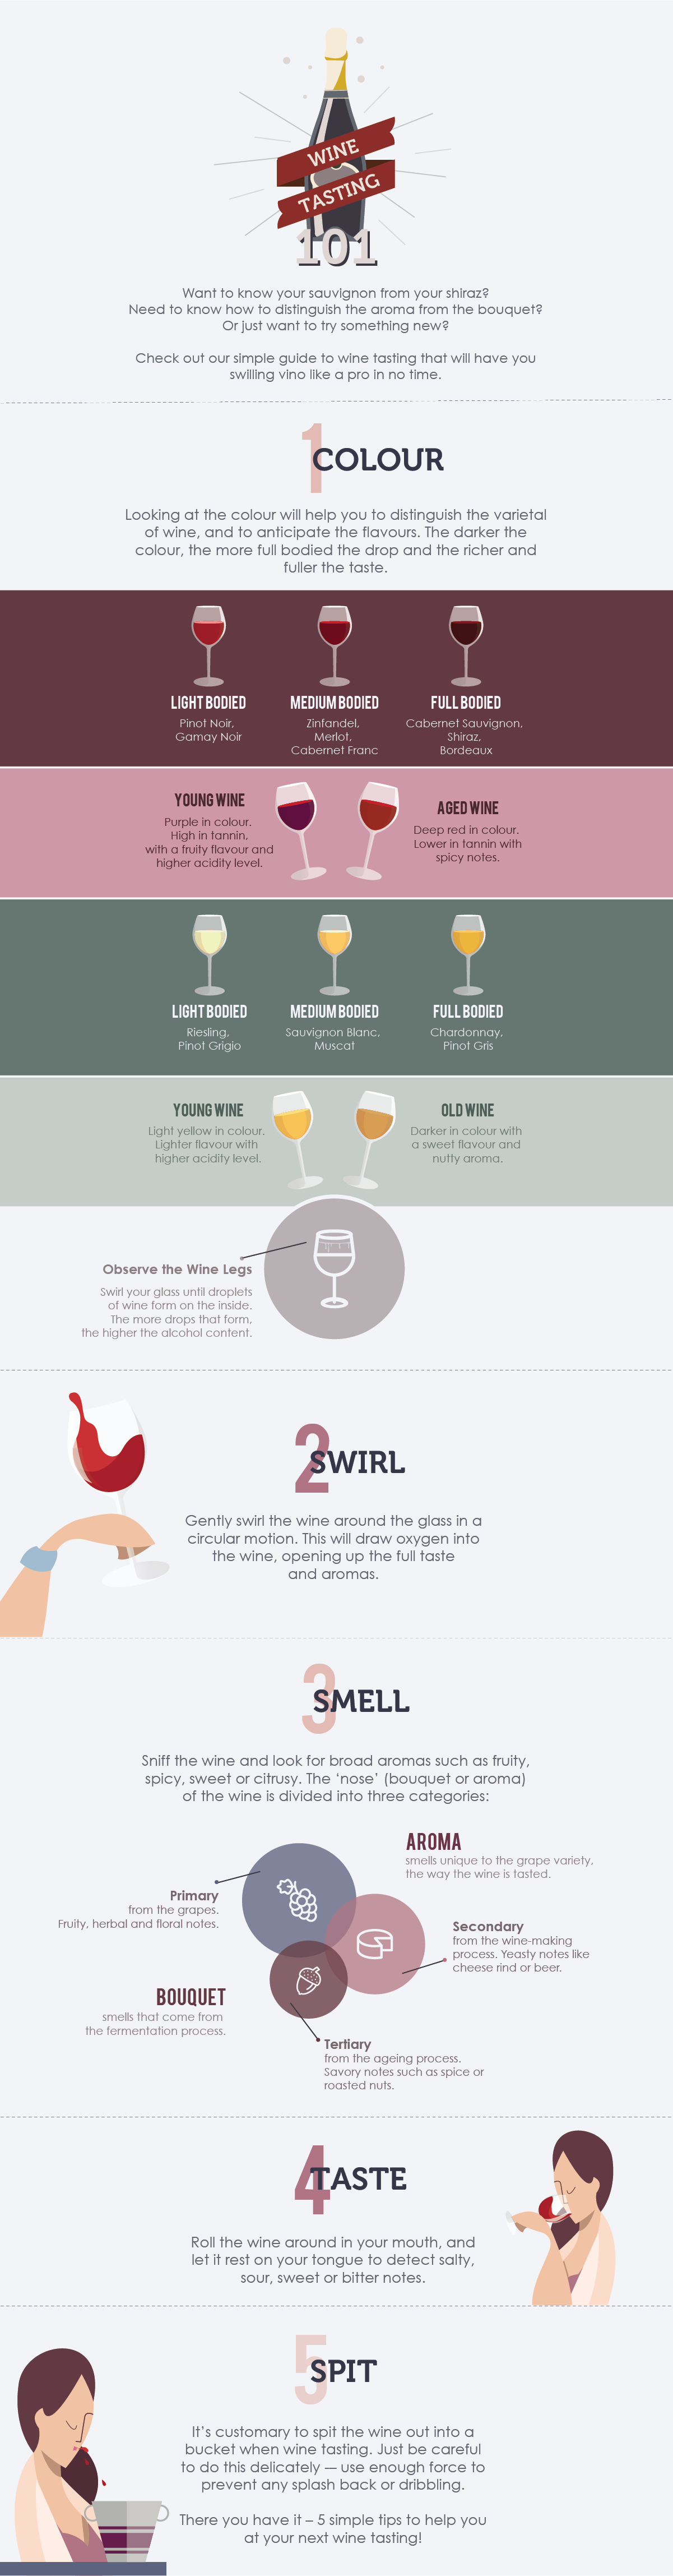 Wine 101: The Beginner’s Guide to Wine Tasting